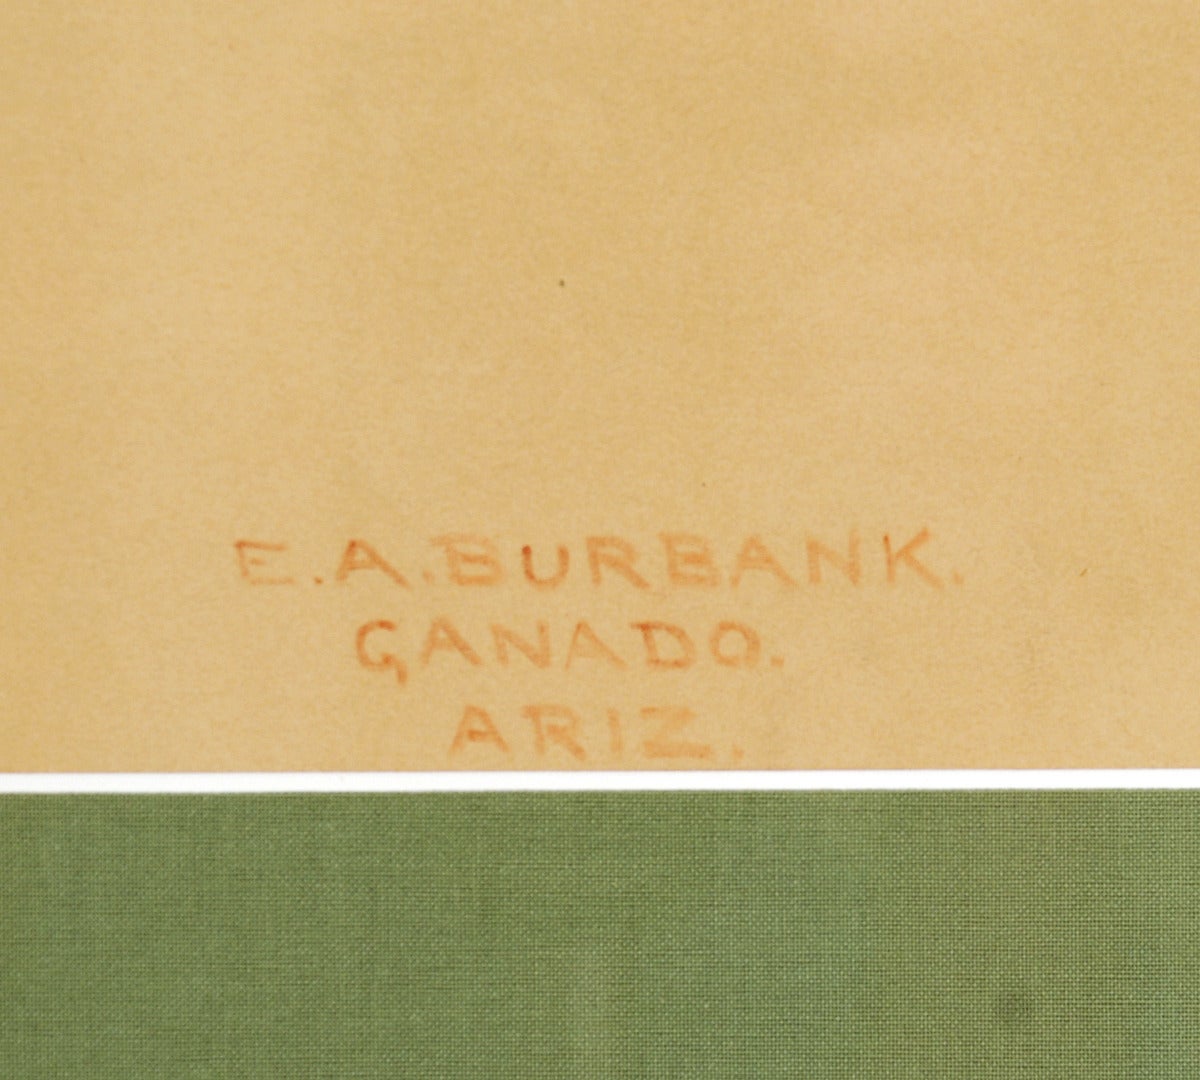 Early 20th Century Rare Original E.A. Burbank American Indian Sketch, Navajo, 1907 For Sale